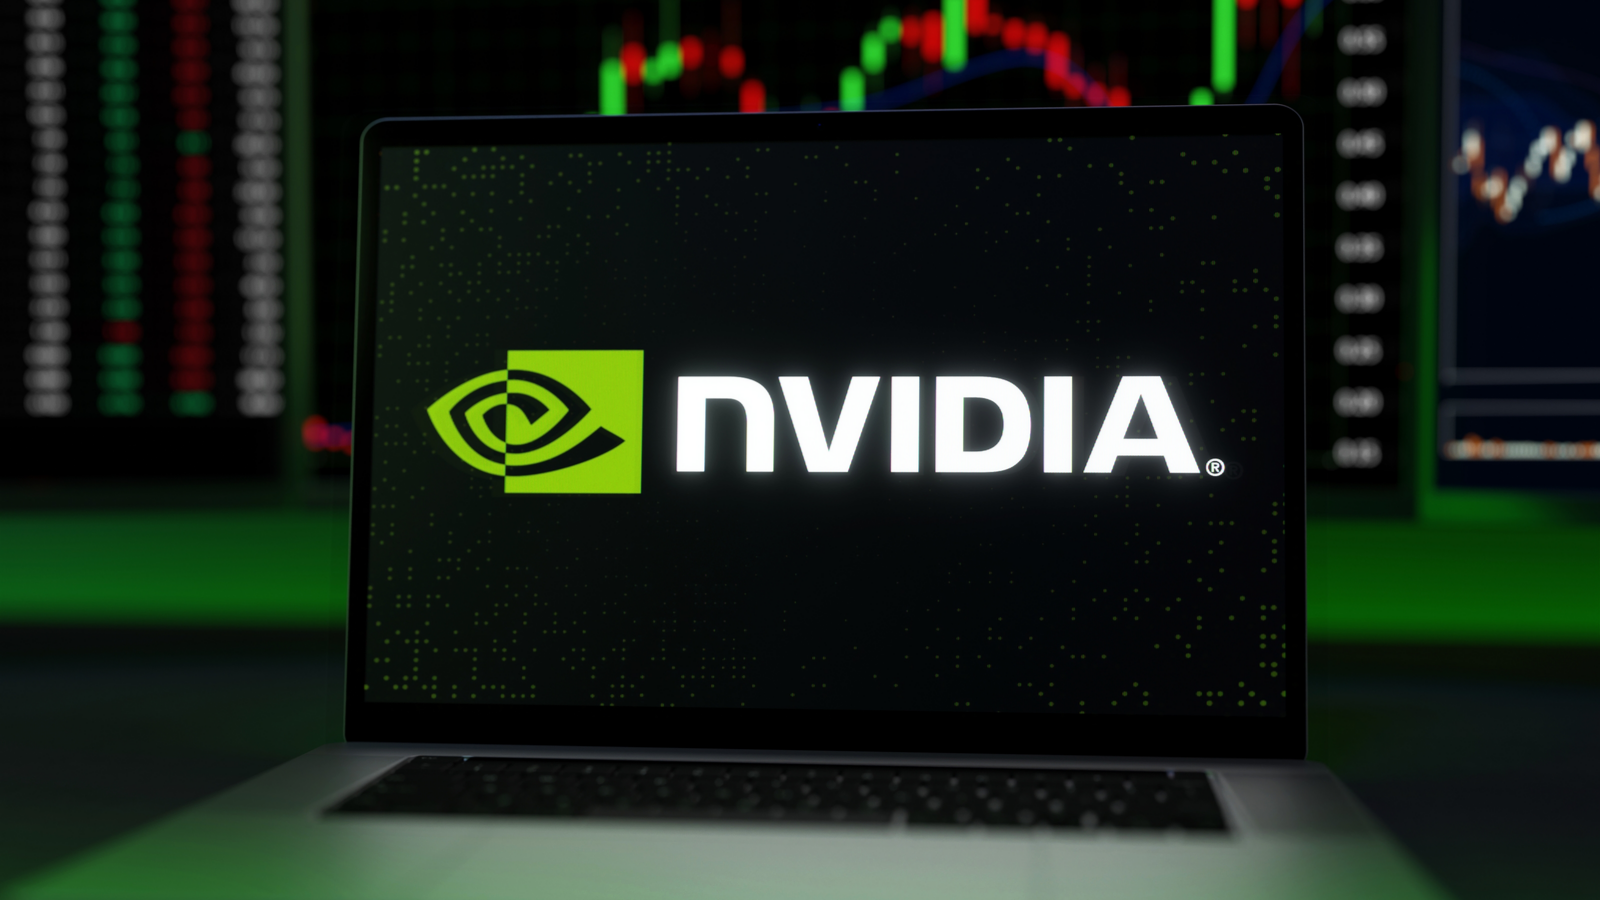 Nvidia (NVDA) logo on a laptop screen trading stock market